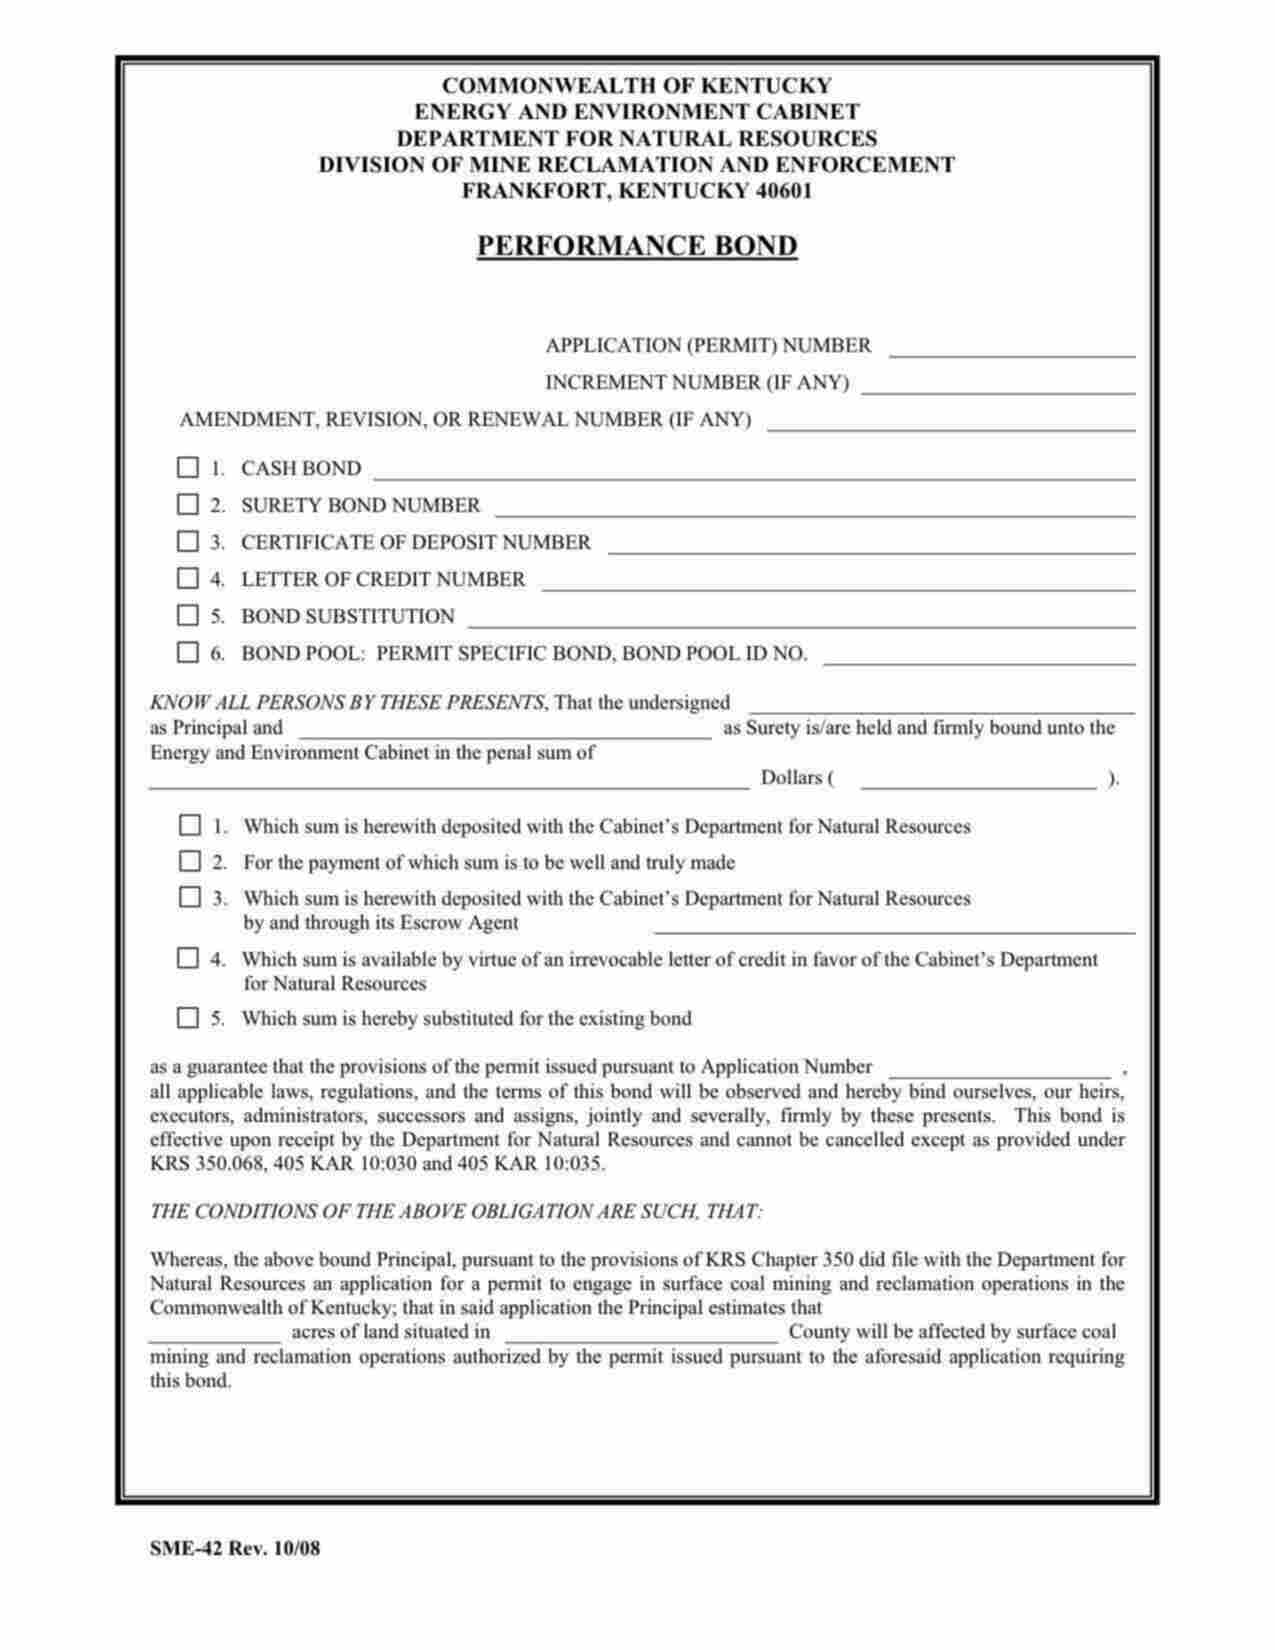 Kentucky Surface Coal Mining and Reclamation Performance Bond Form